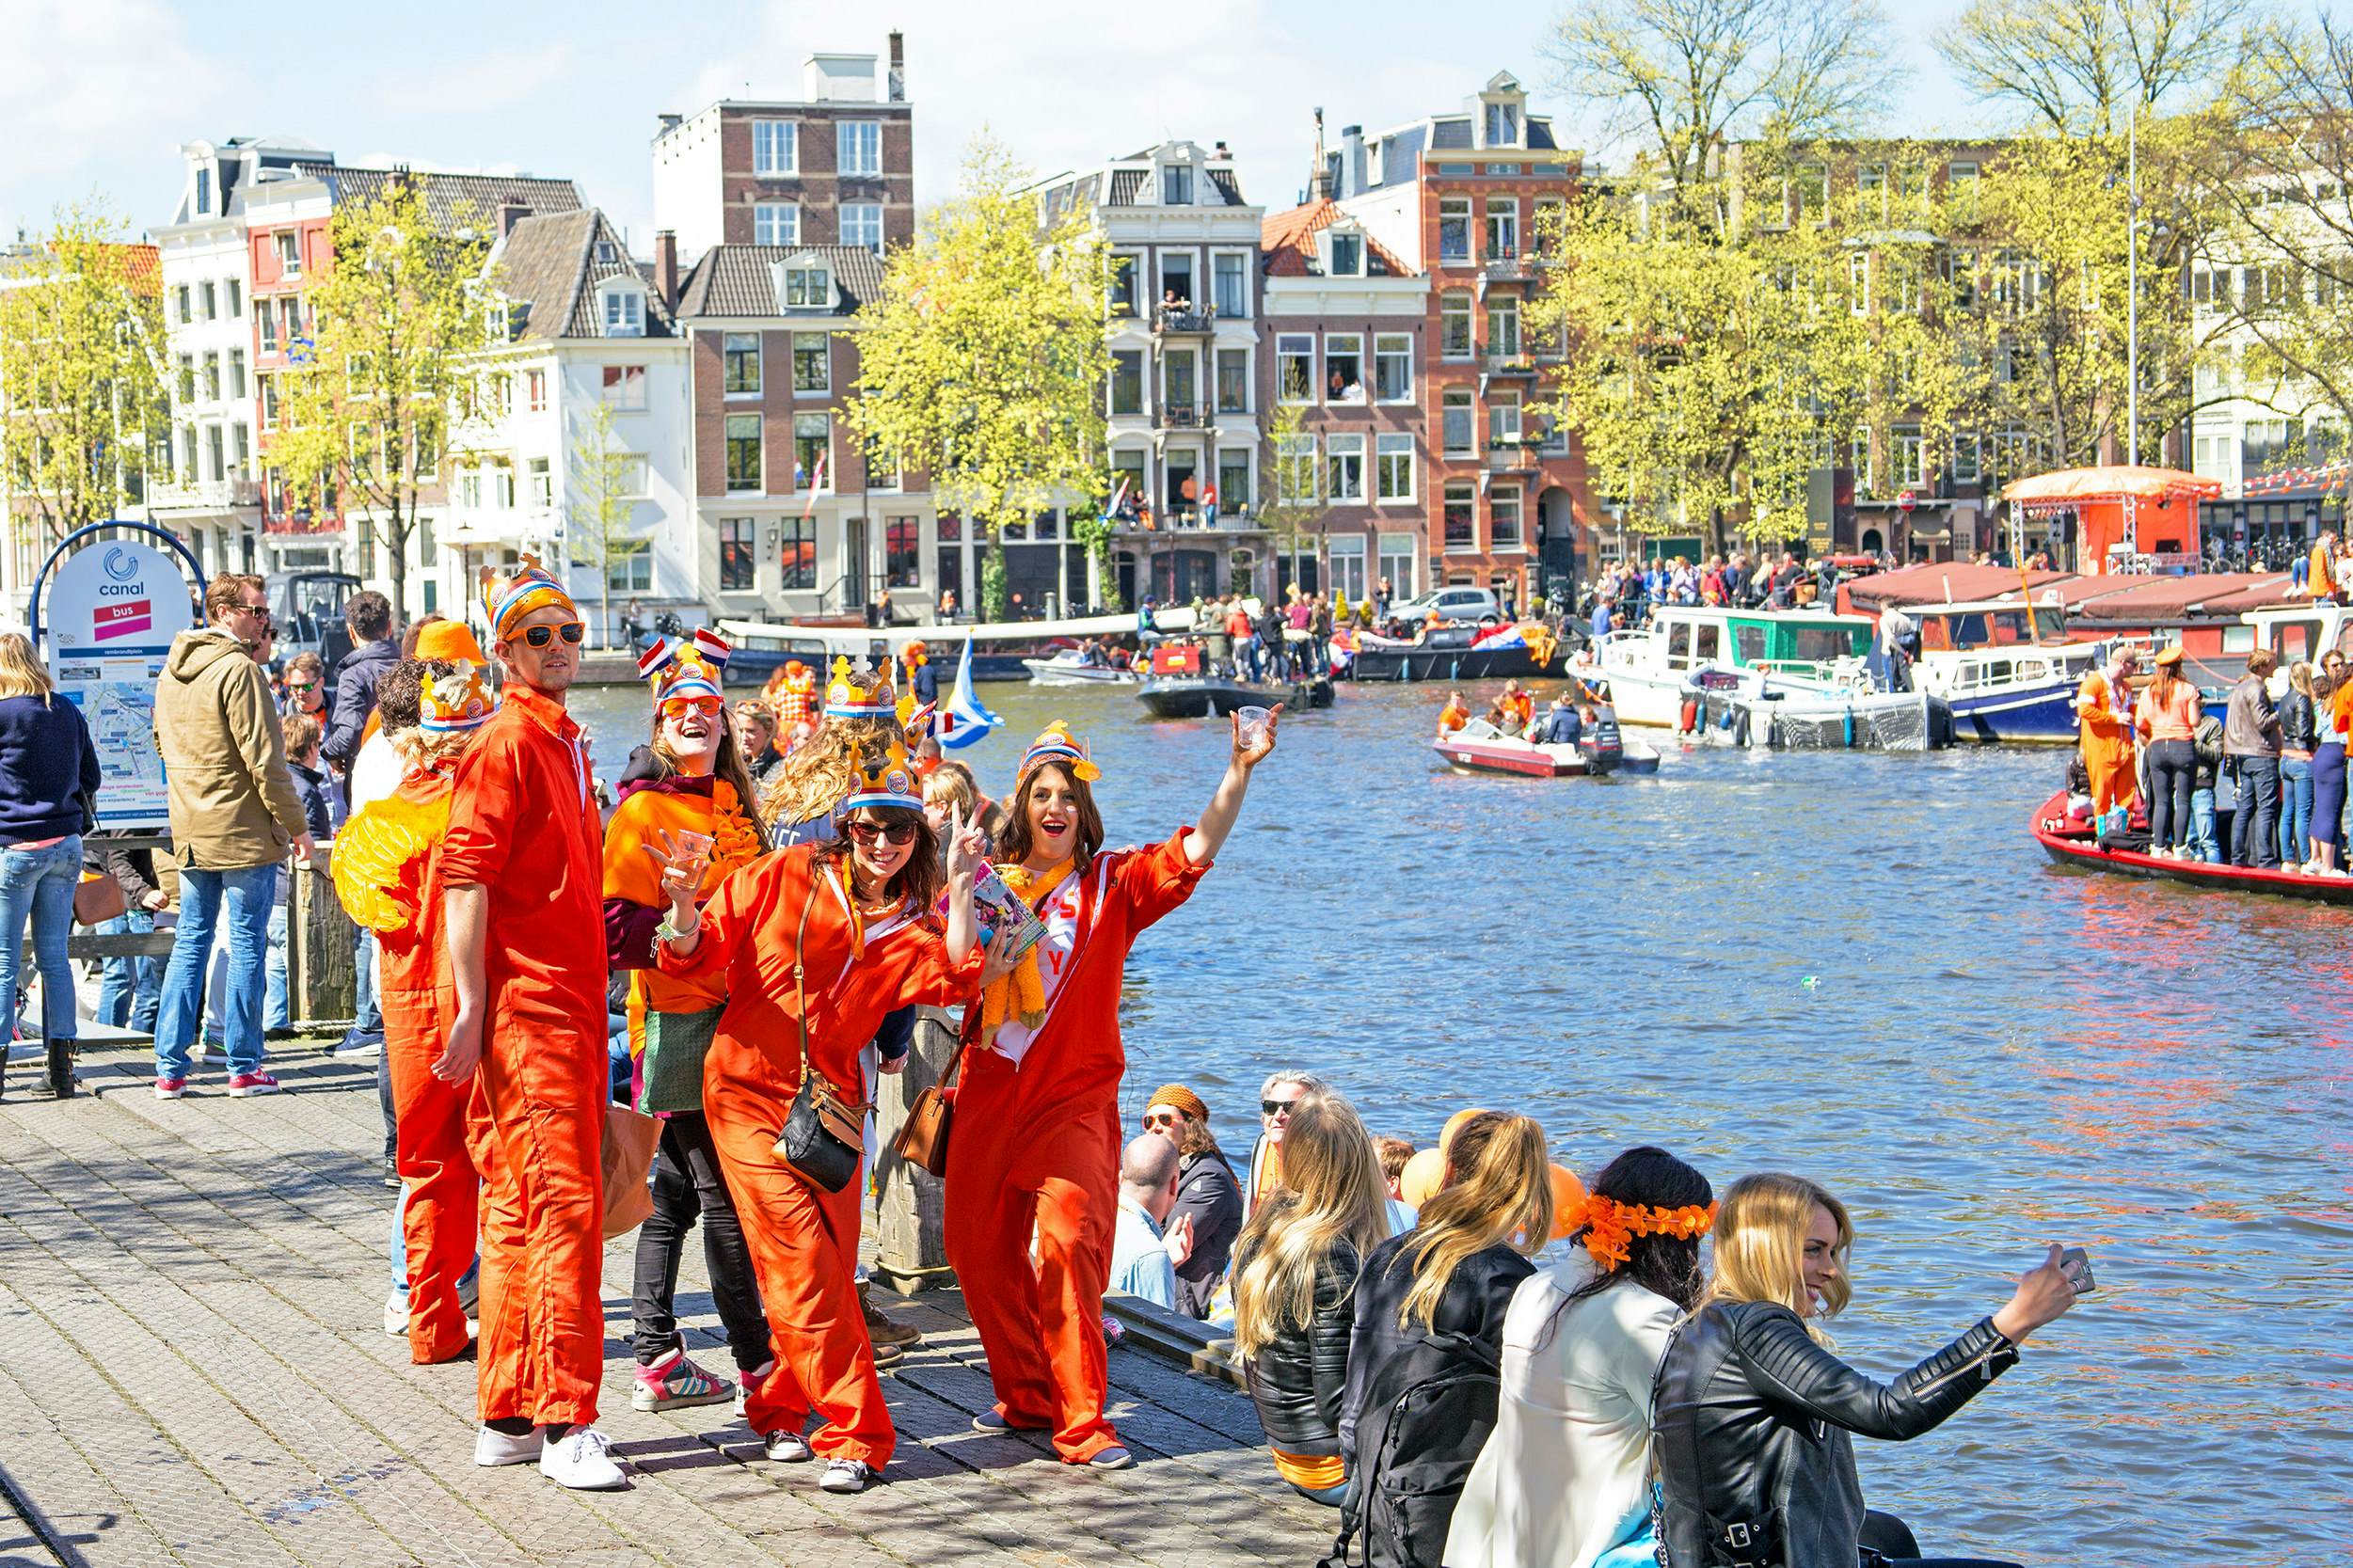 People dressed in orange celebrate near a canal in a city